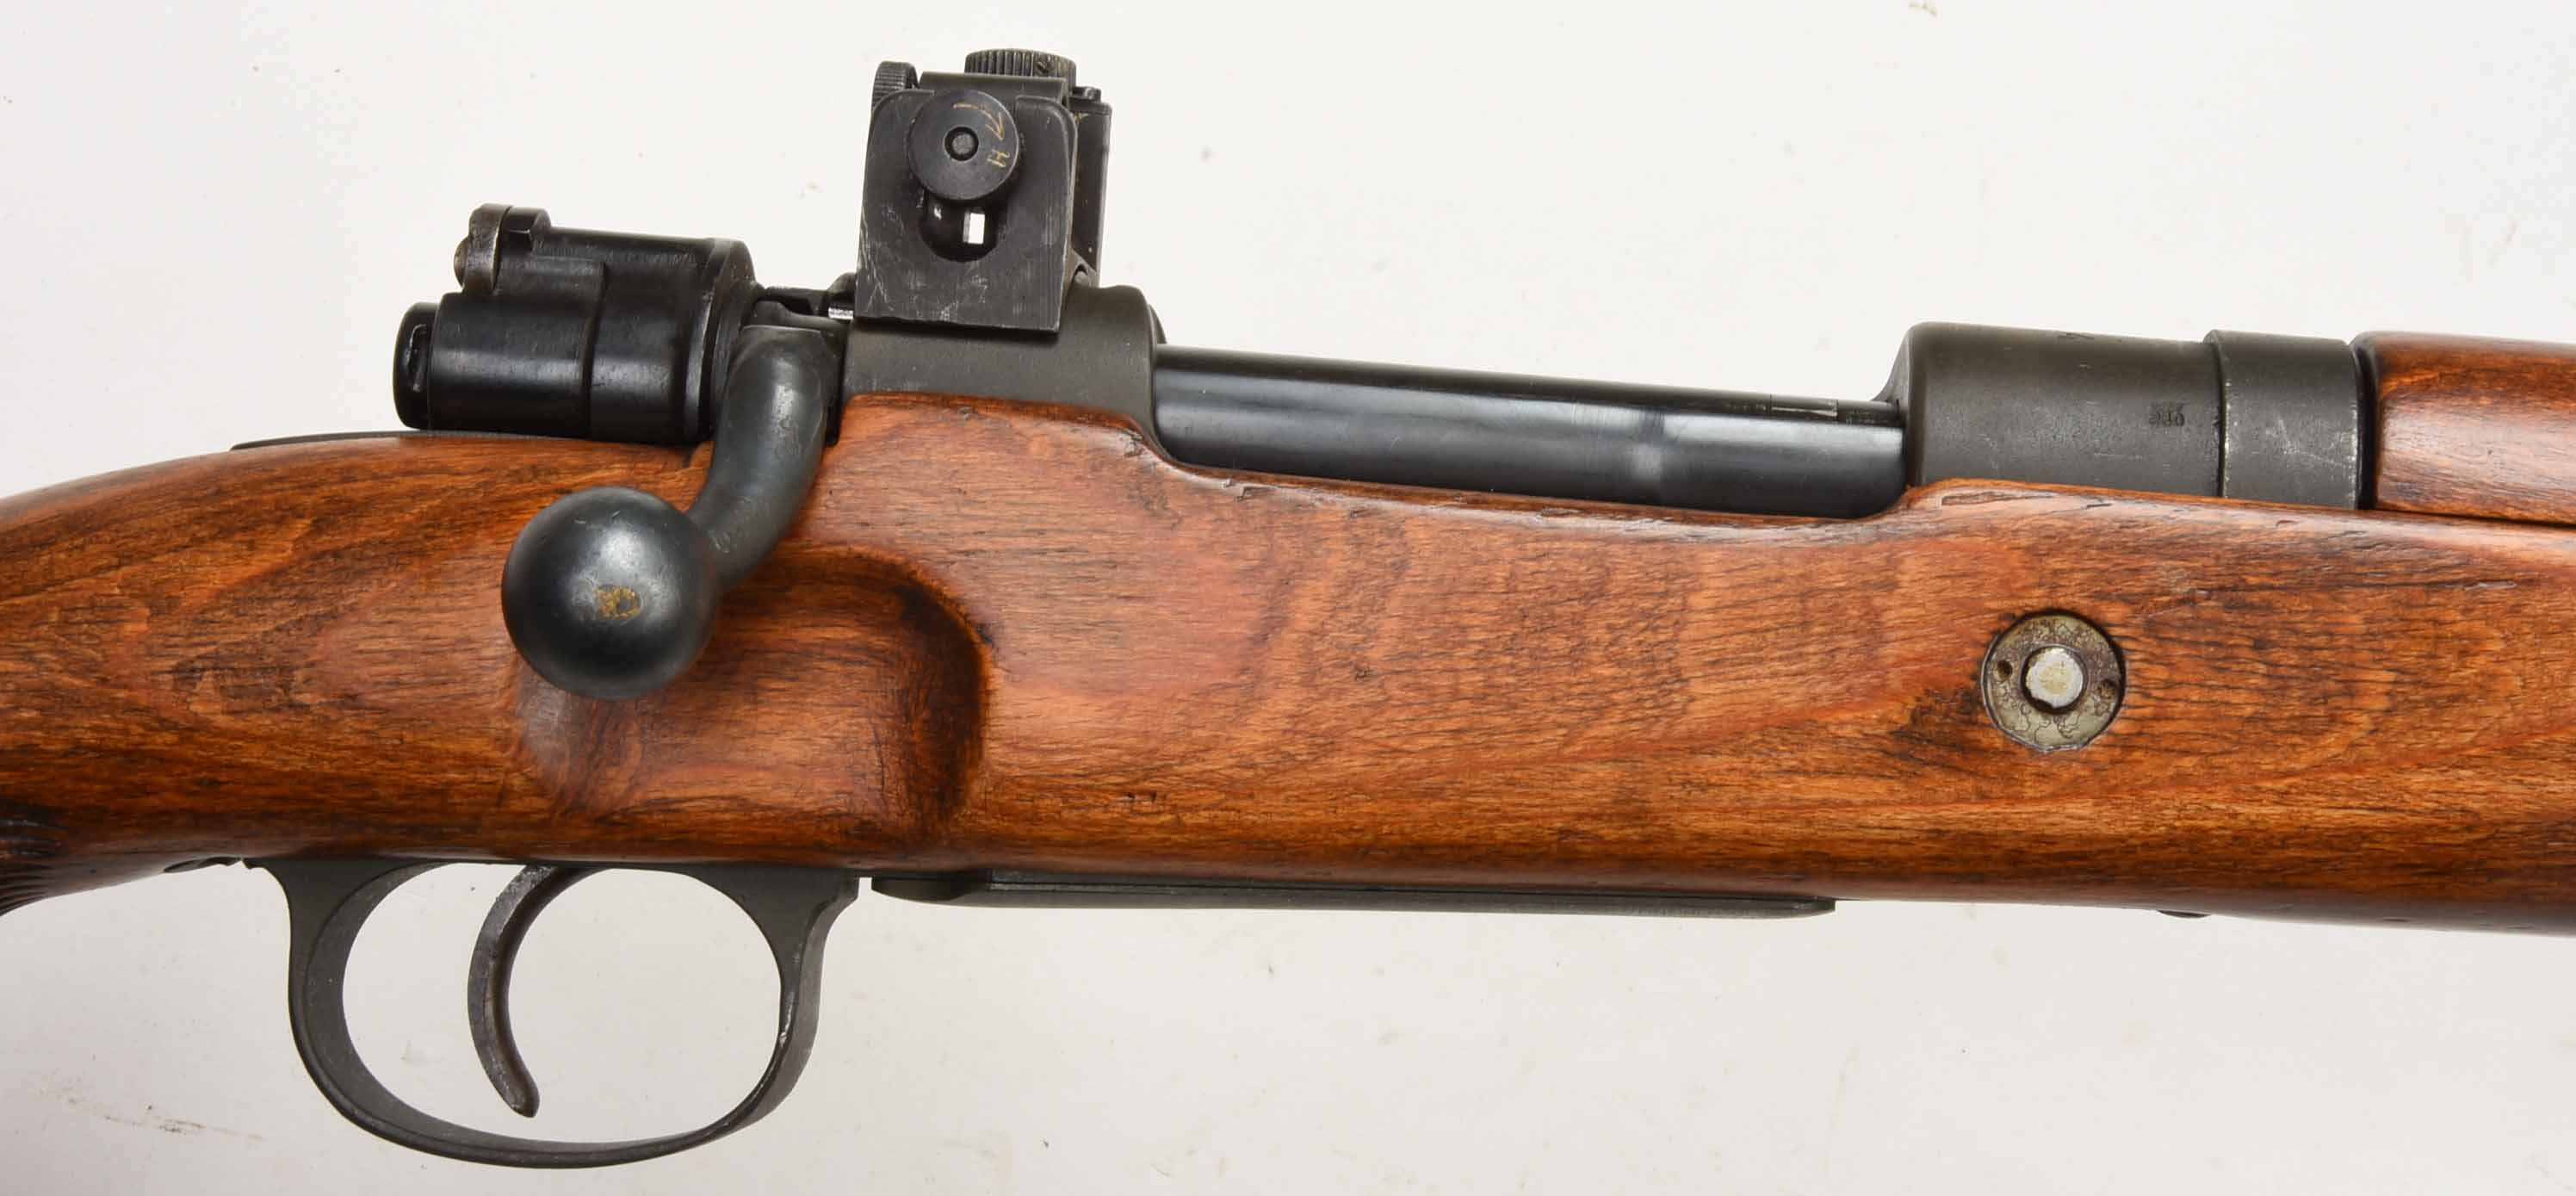 ./guns/rifle/bilder/Rifle-Kongsberg-Mauser-M64-8892-2.jpg